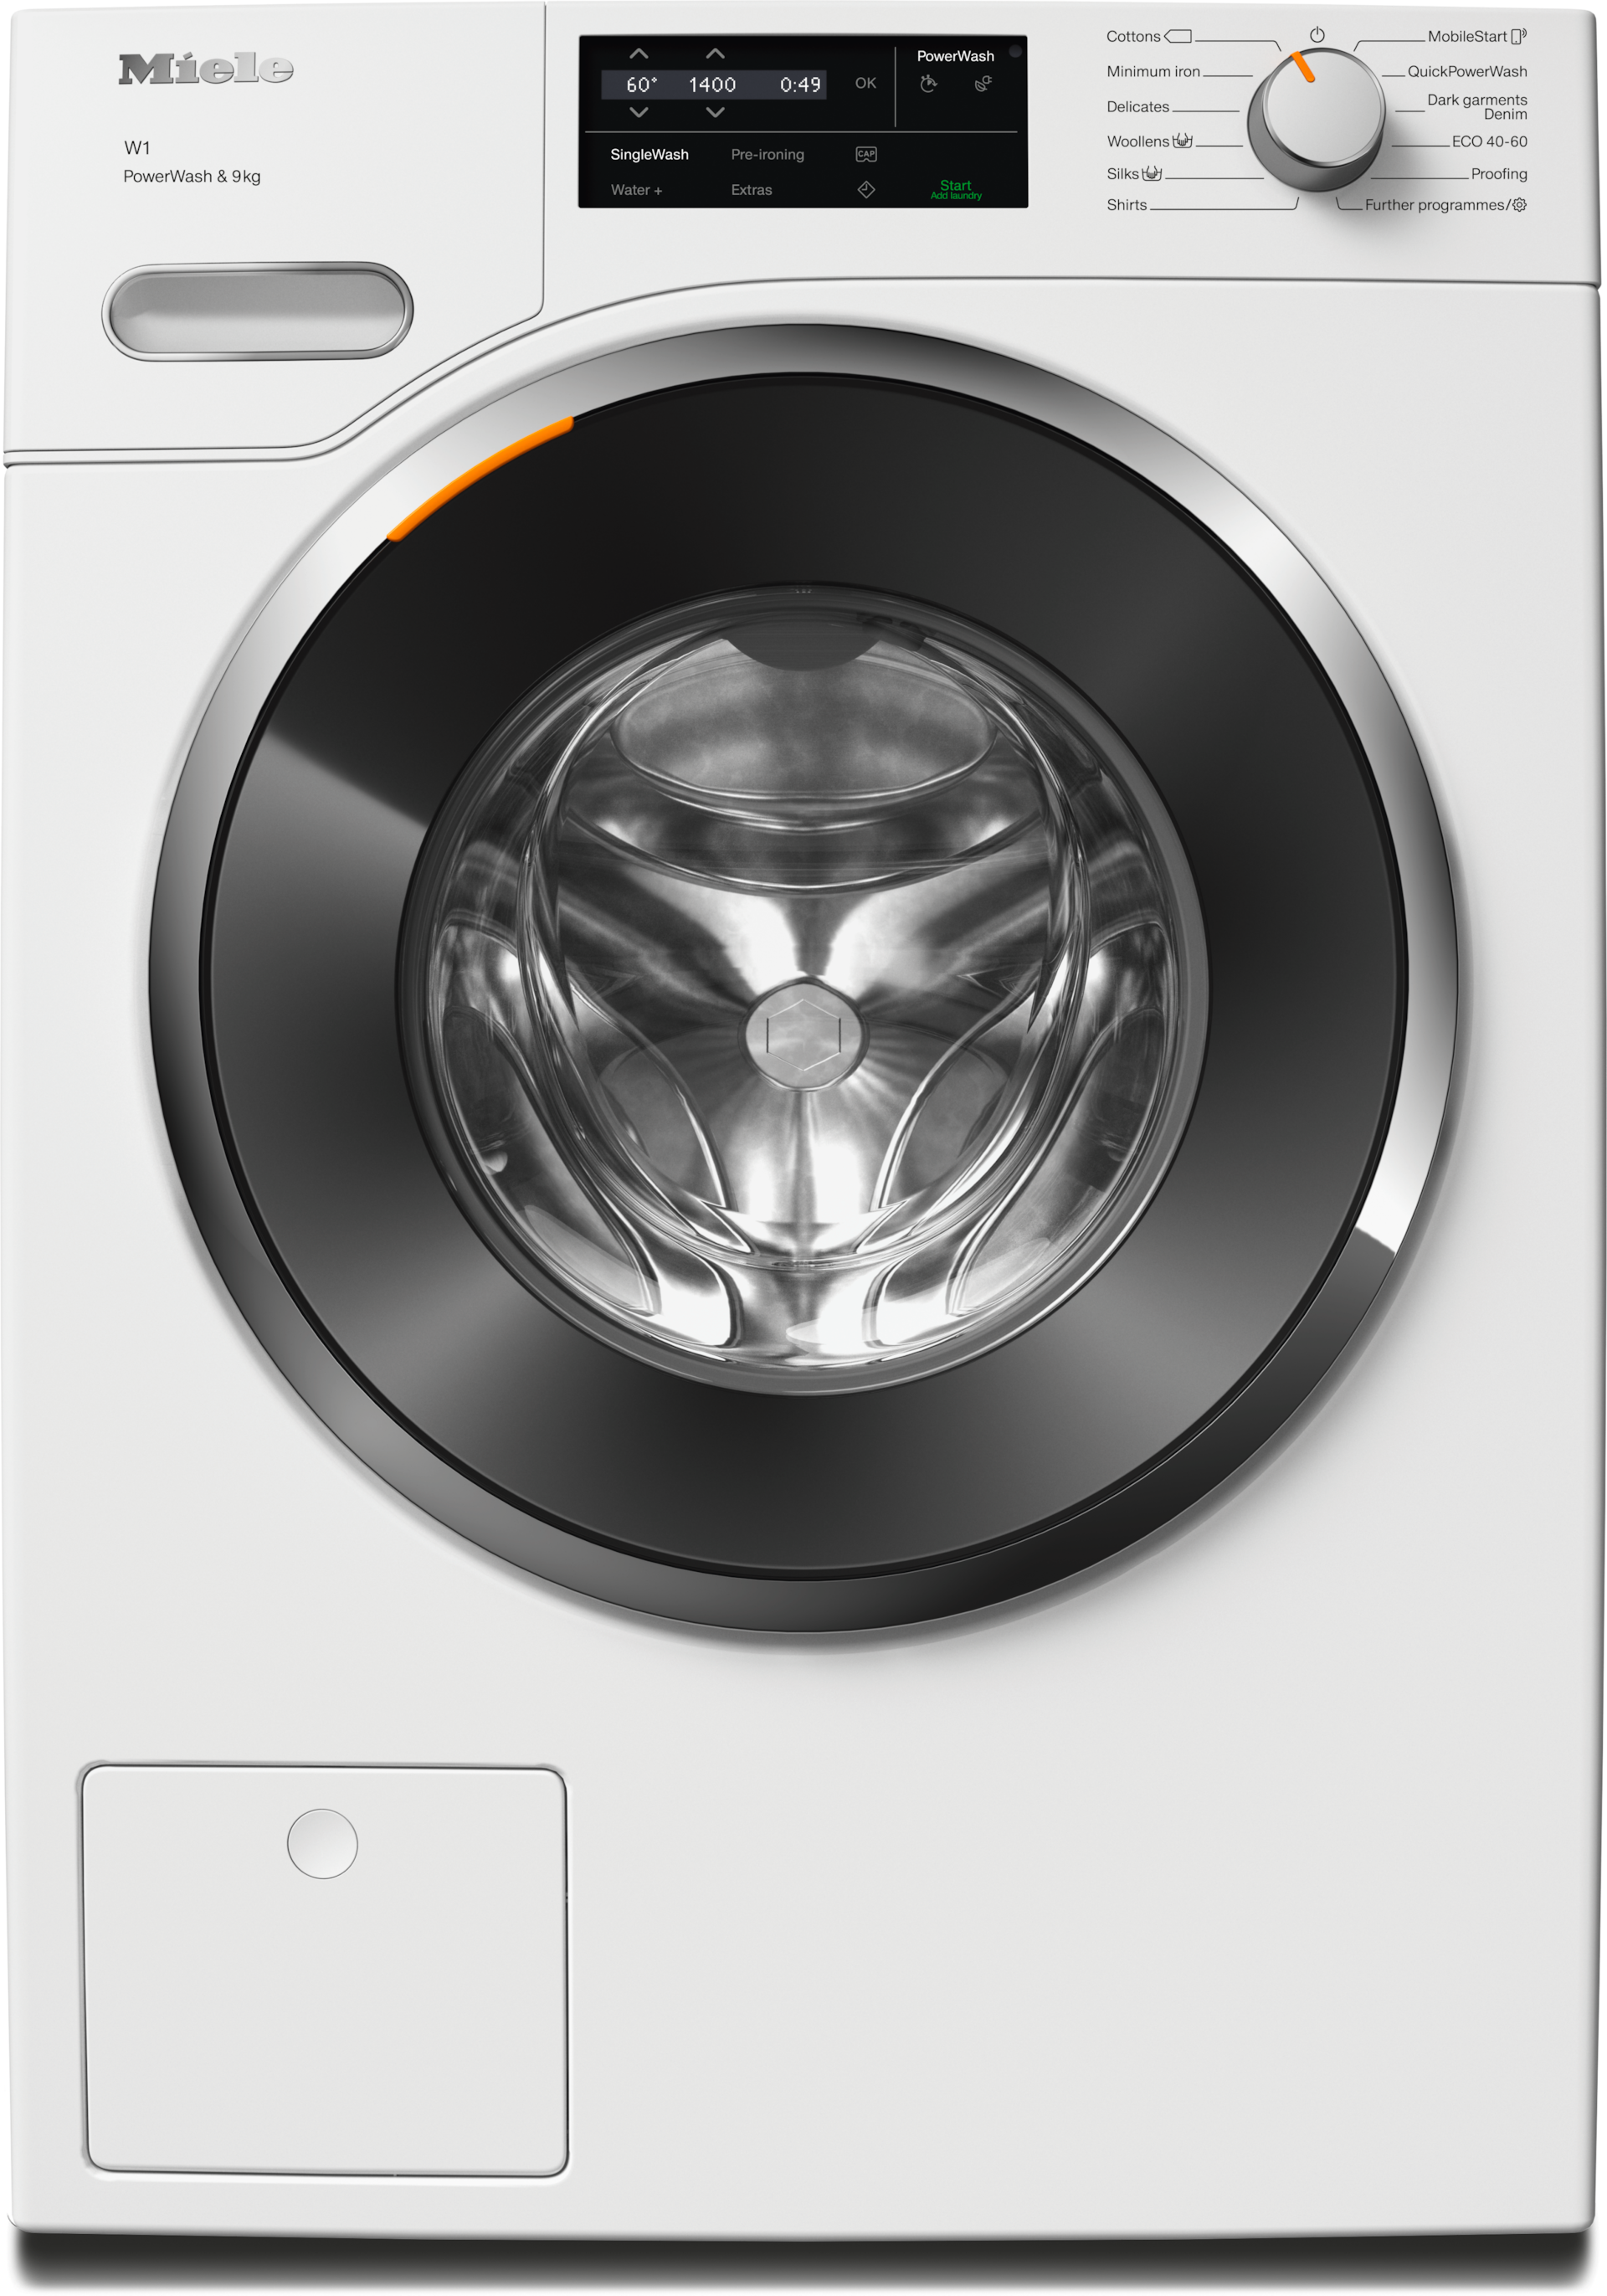 Mașini de spălat - WWG360 WCS PWash&9kg Alb lotus - 1